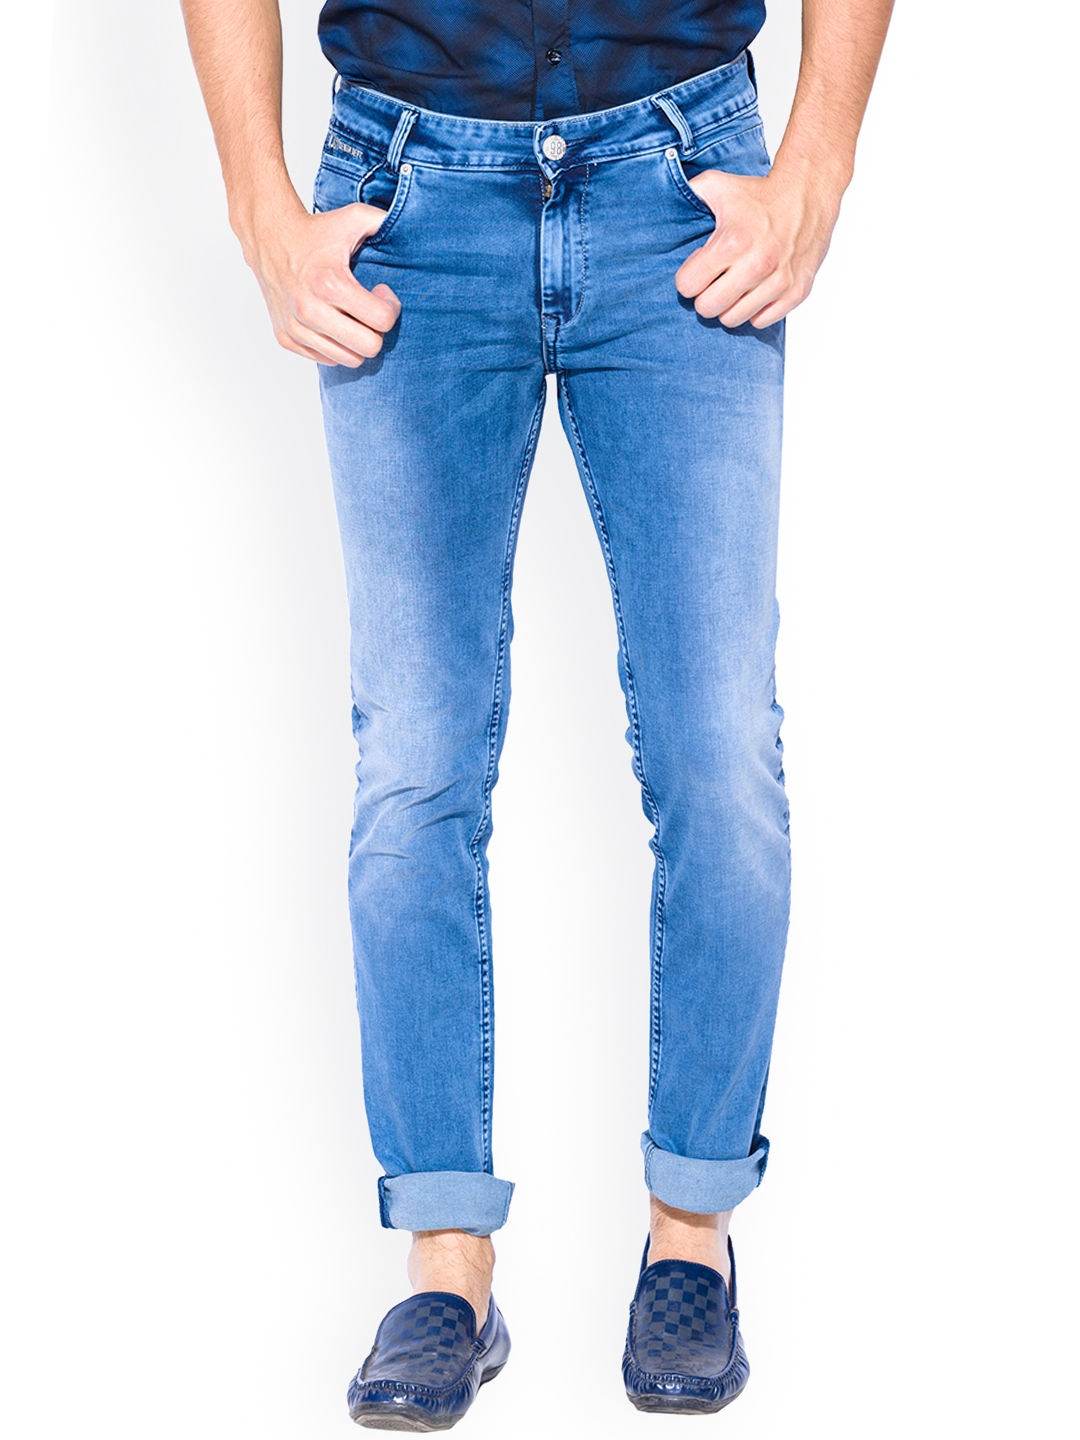 mufti jeans myntra